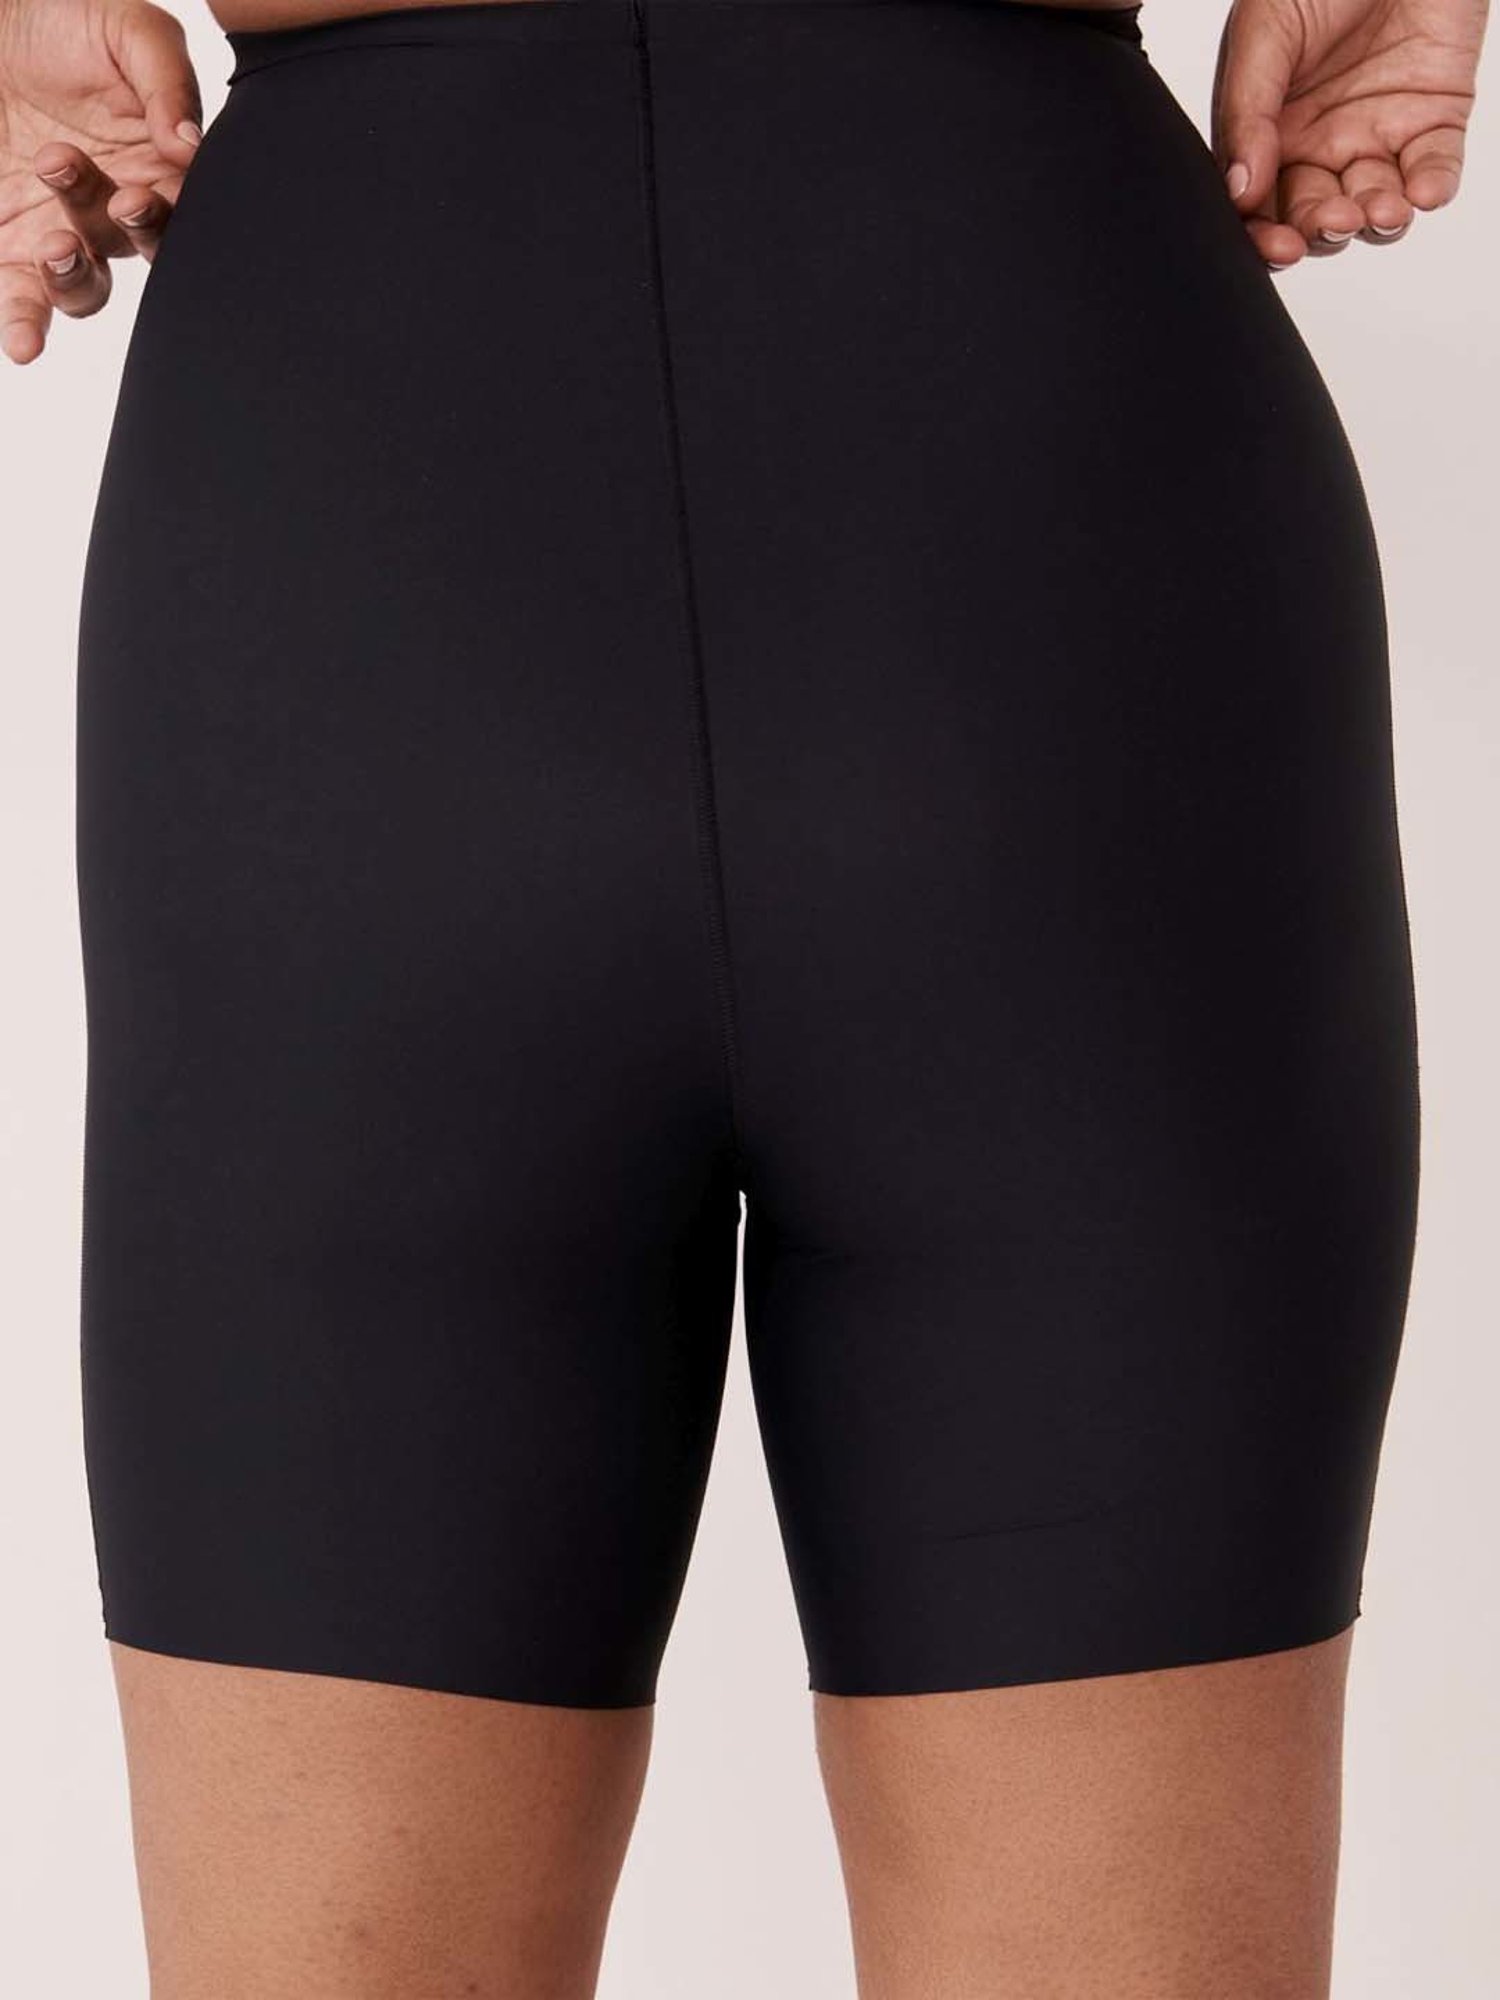 Super Fit™ High Waisted ShapeWear Panty【Black Color】【2PCS/PACK